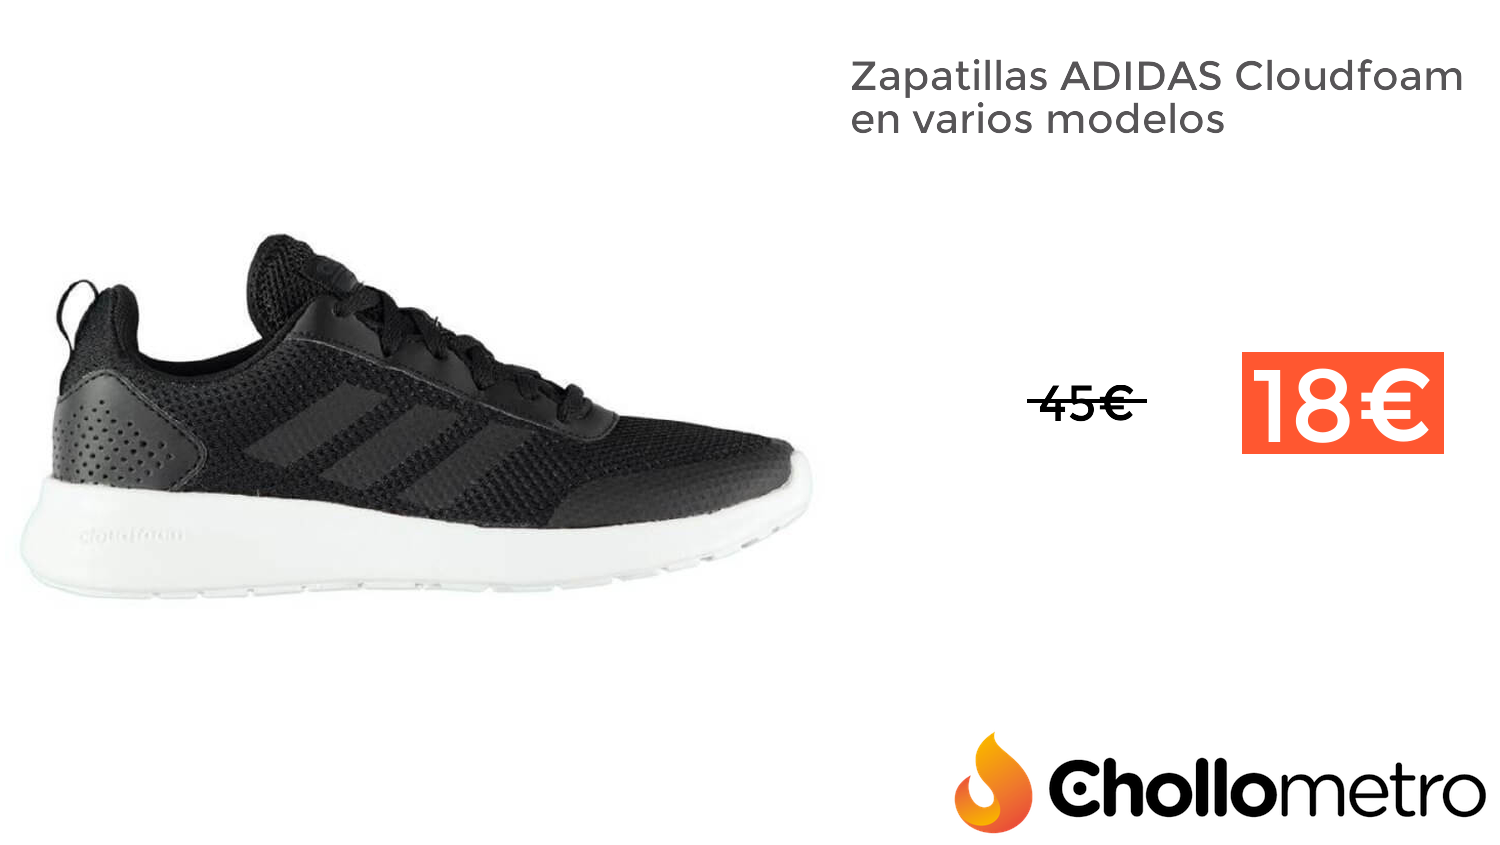 Chollometro Twitter: "#CHOLLO Zapatillas ADIDAS Cloudfoam en varios modelos disponibles por 18€ ➡️ https://t.co/lQRFgOFhzo https://t.co/iuilAW22bp" /